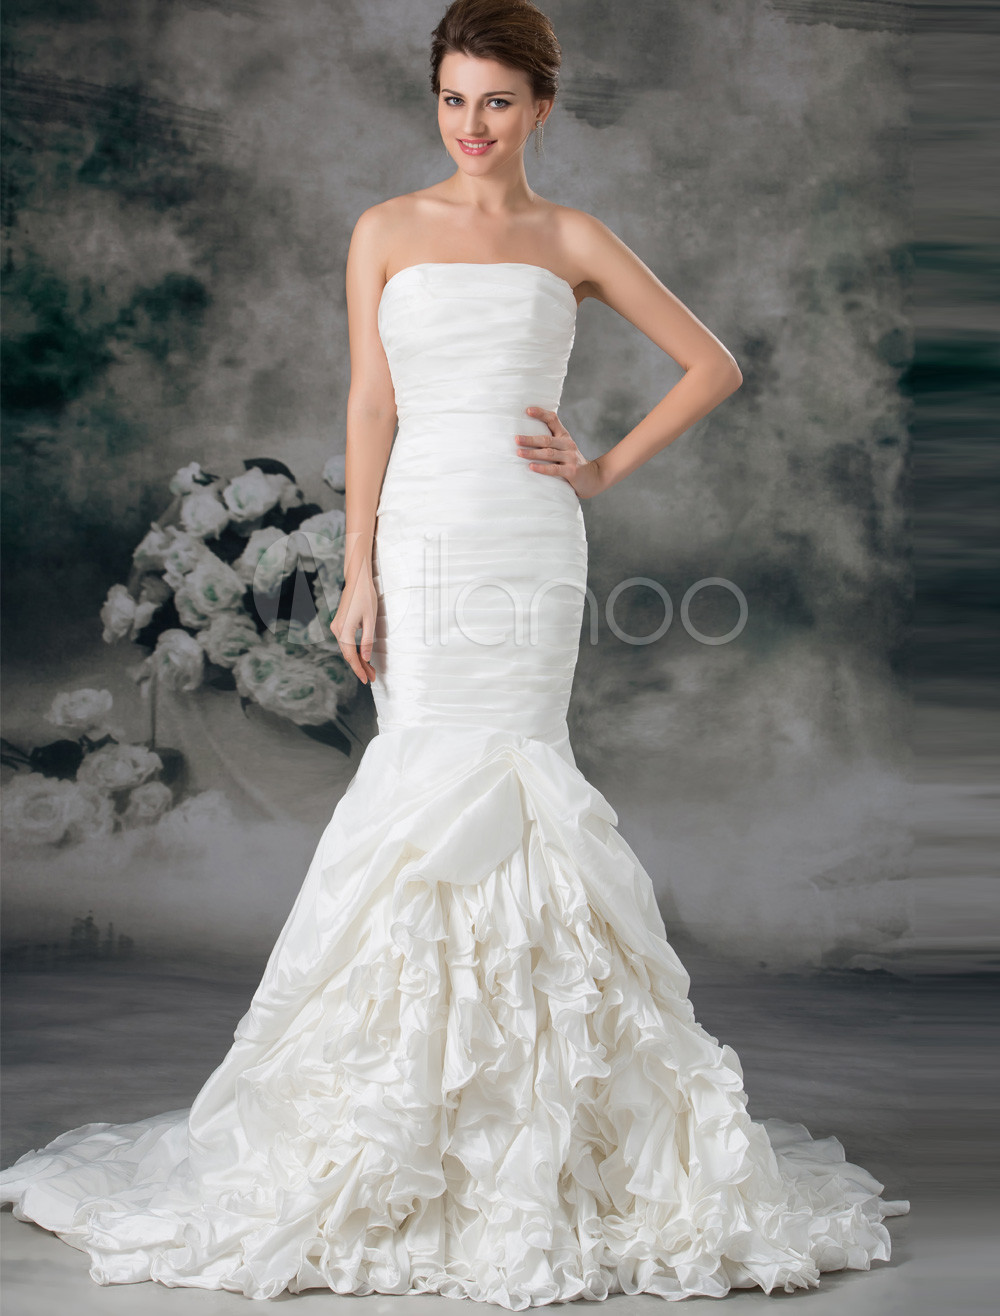 Ivory Mermaid Strapless Tiered Taffeta Bridal Wedding Gown - Milanoo.com